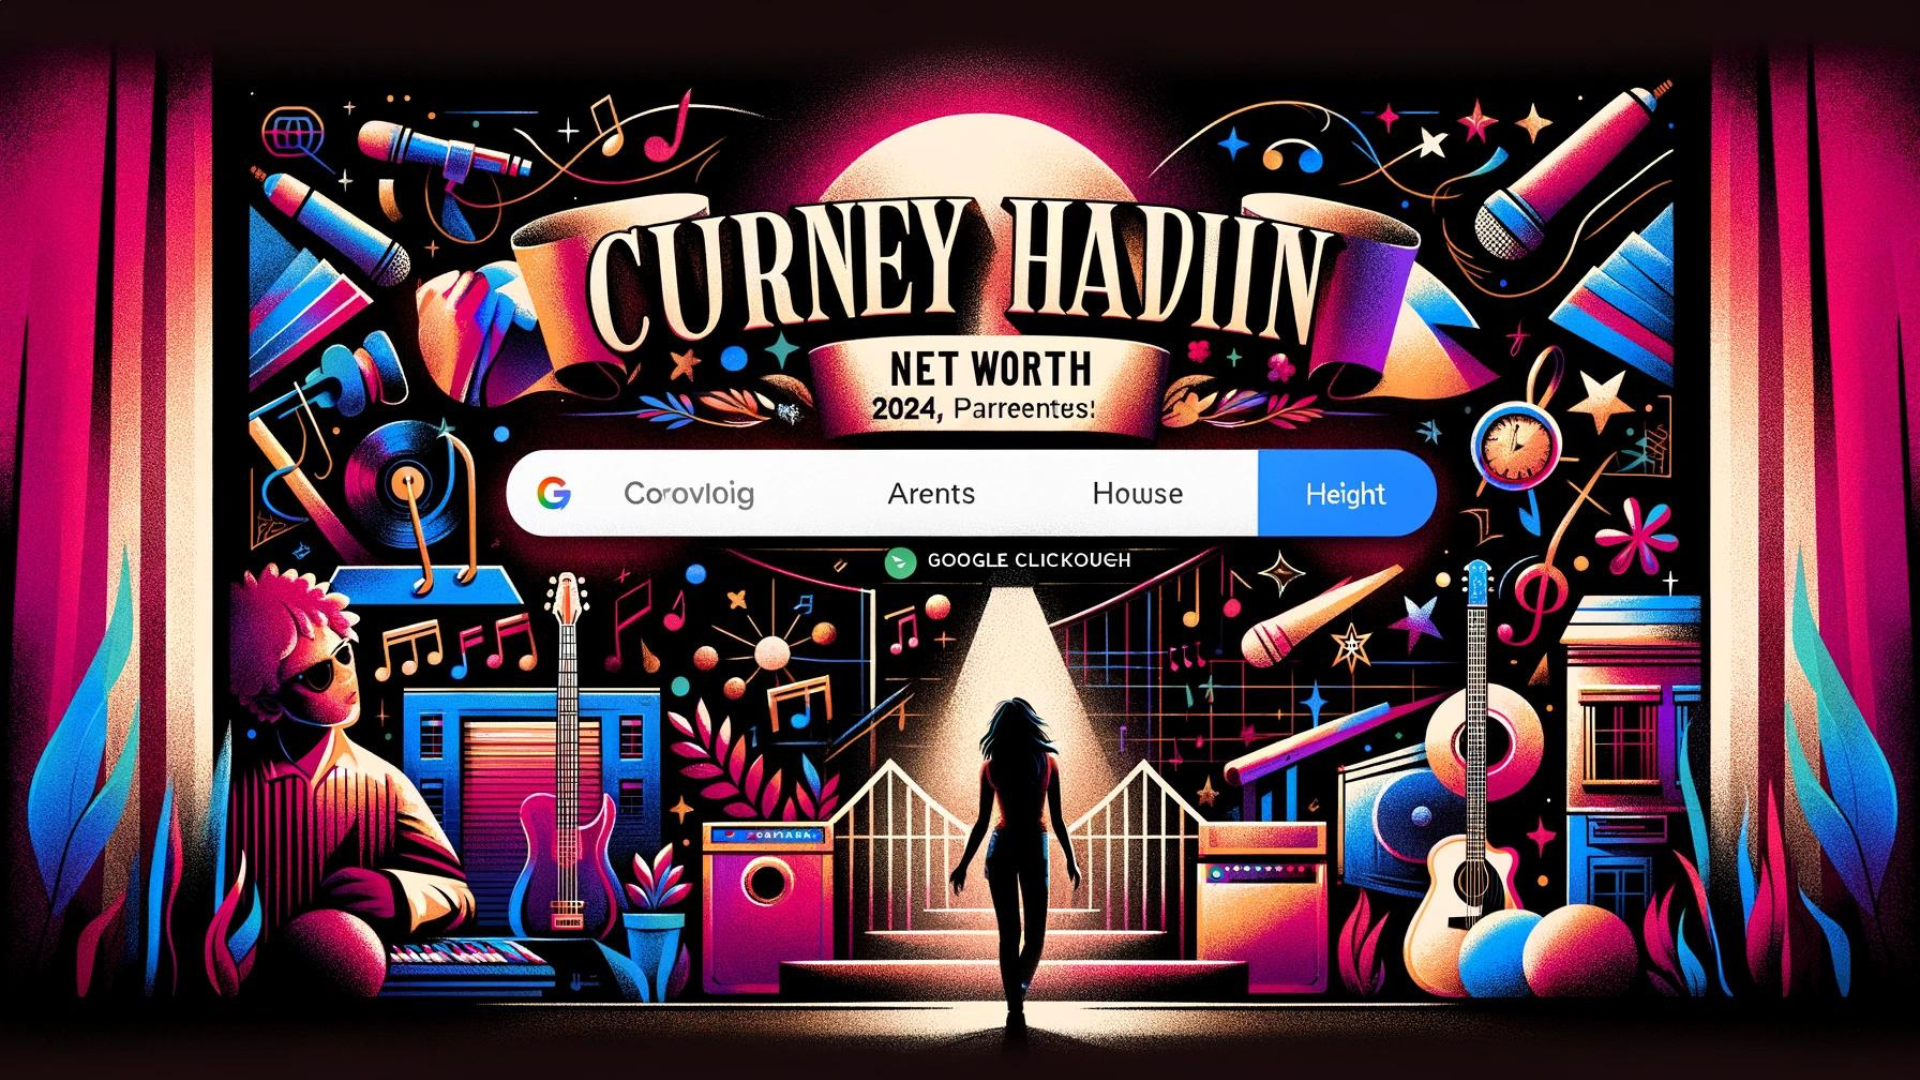 Courtney Hadwin Net Worth 2024